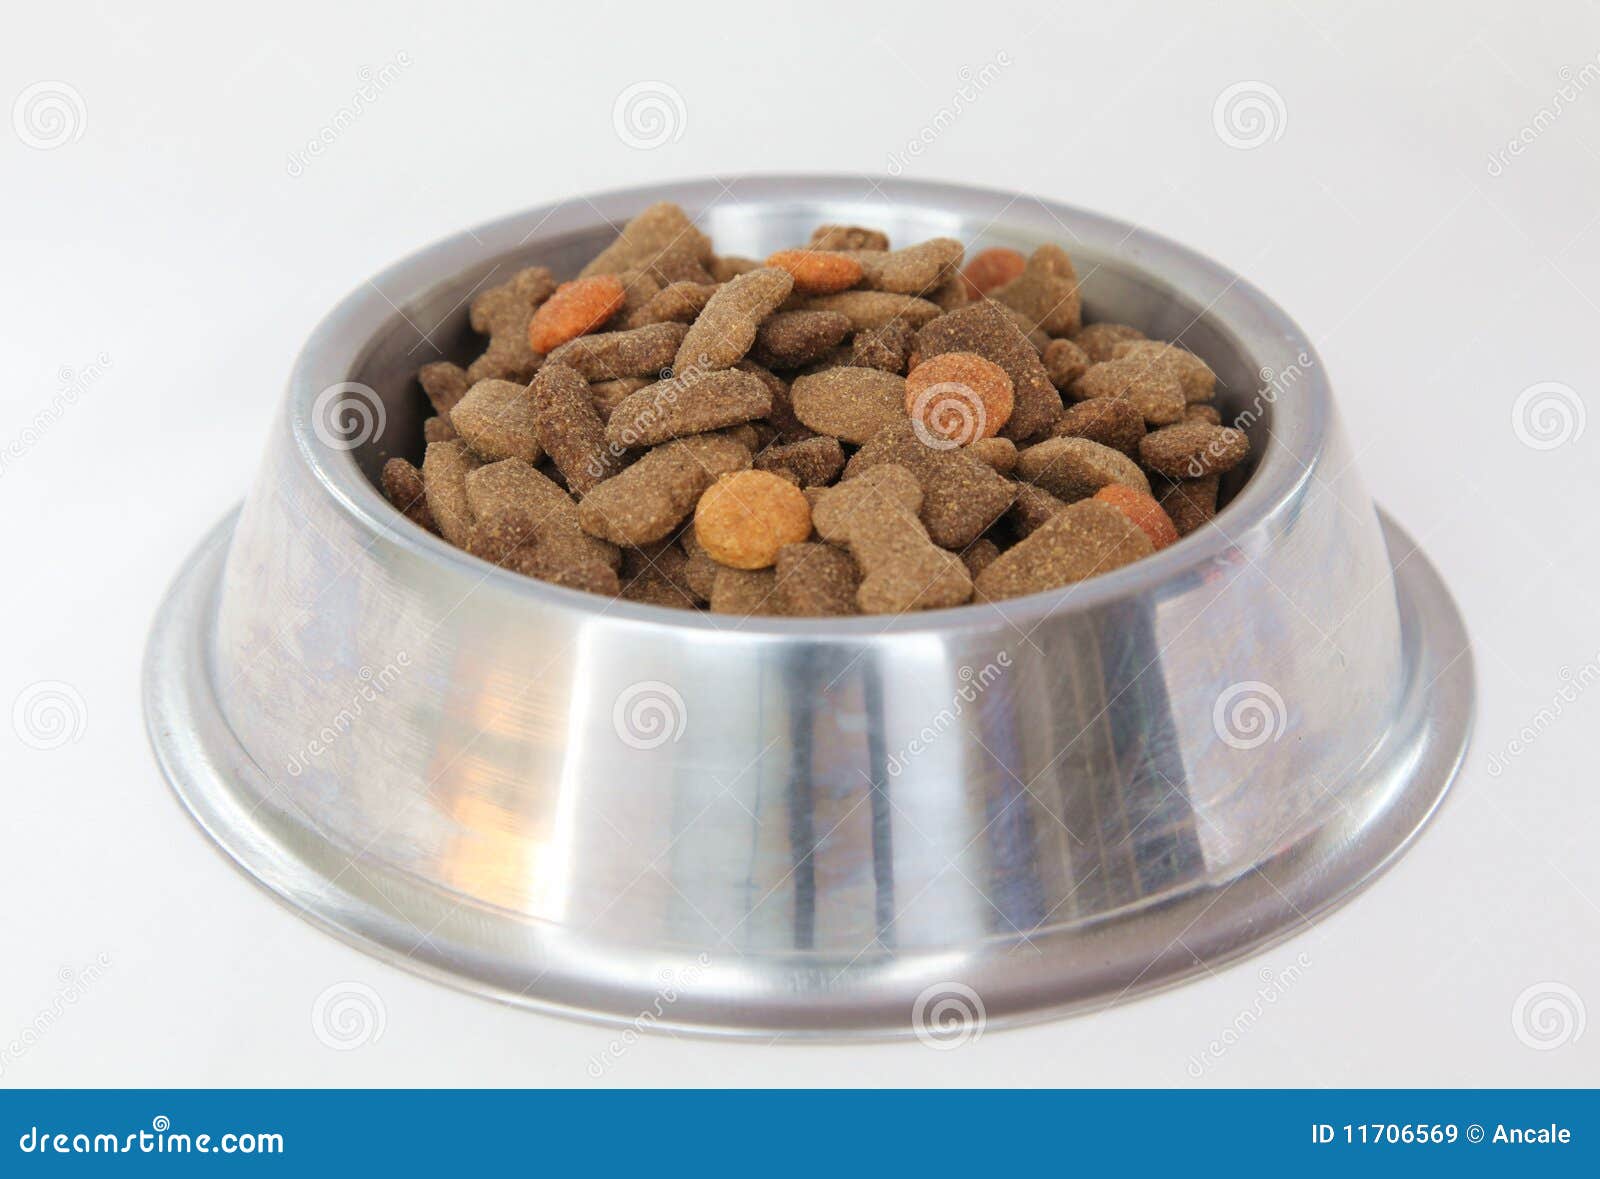 Homemade Dog Food To Prevent Bladder Stones